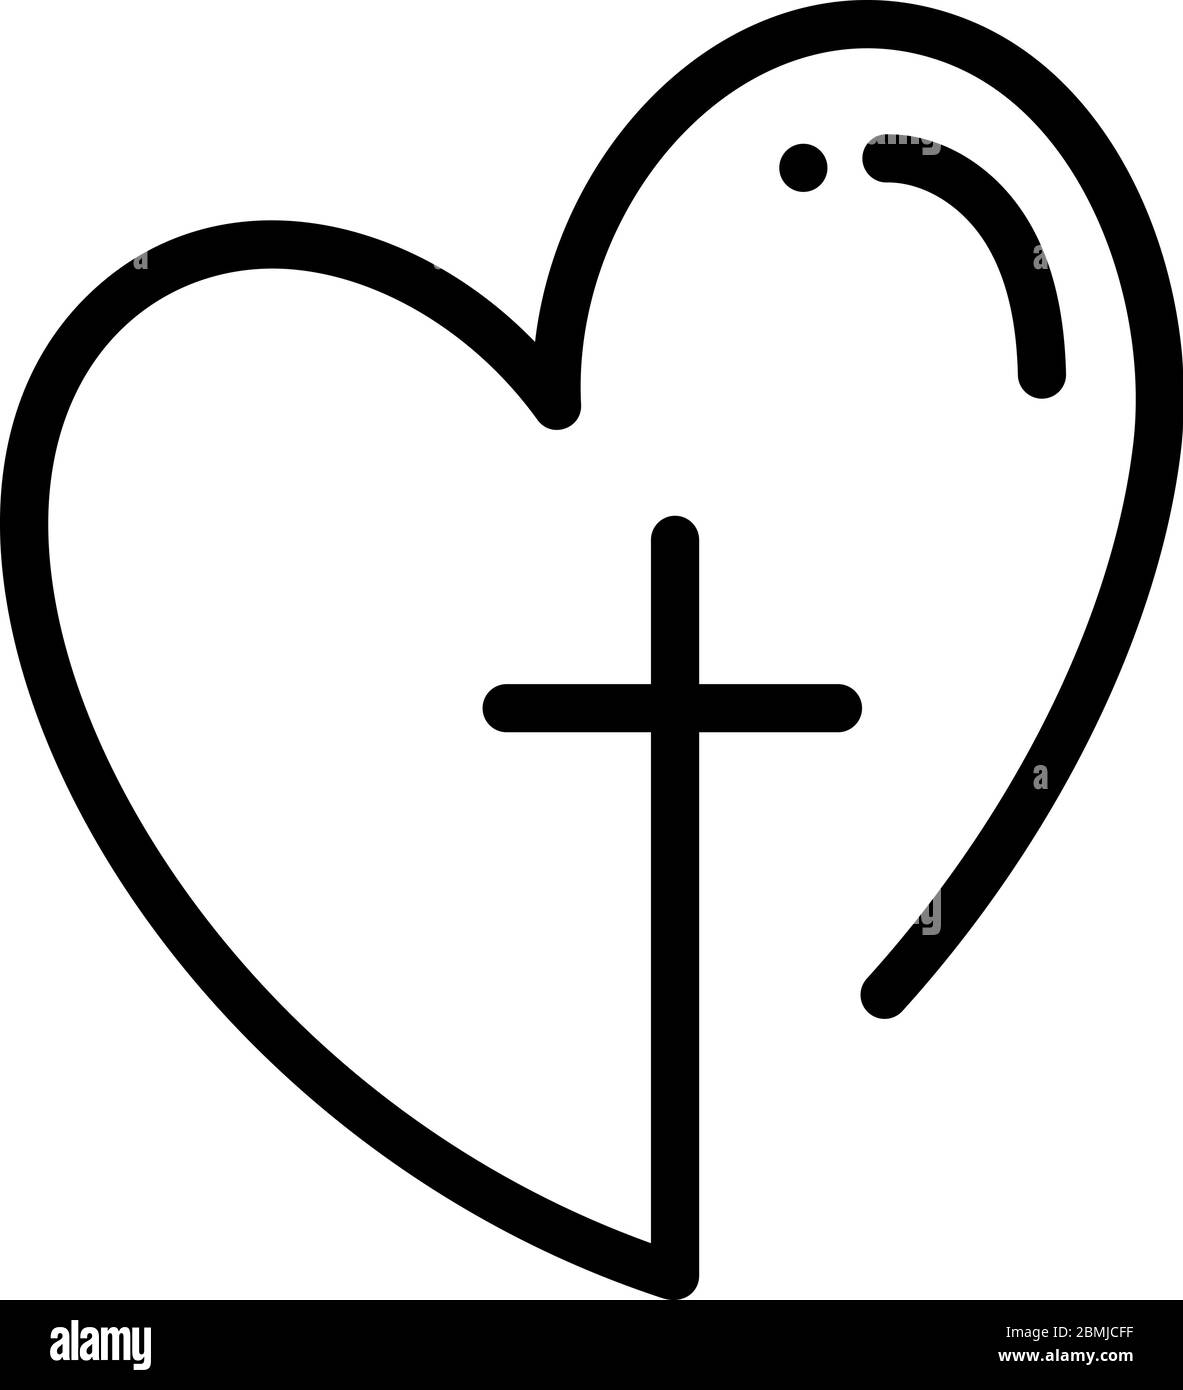 Abstrakte religiöse Kreuz und Herz-Ikone. Logo „Christian love“. Monoline Vektorgrafik Stock Vektor